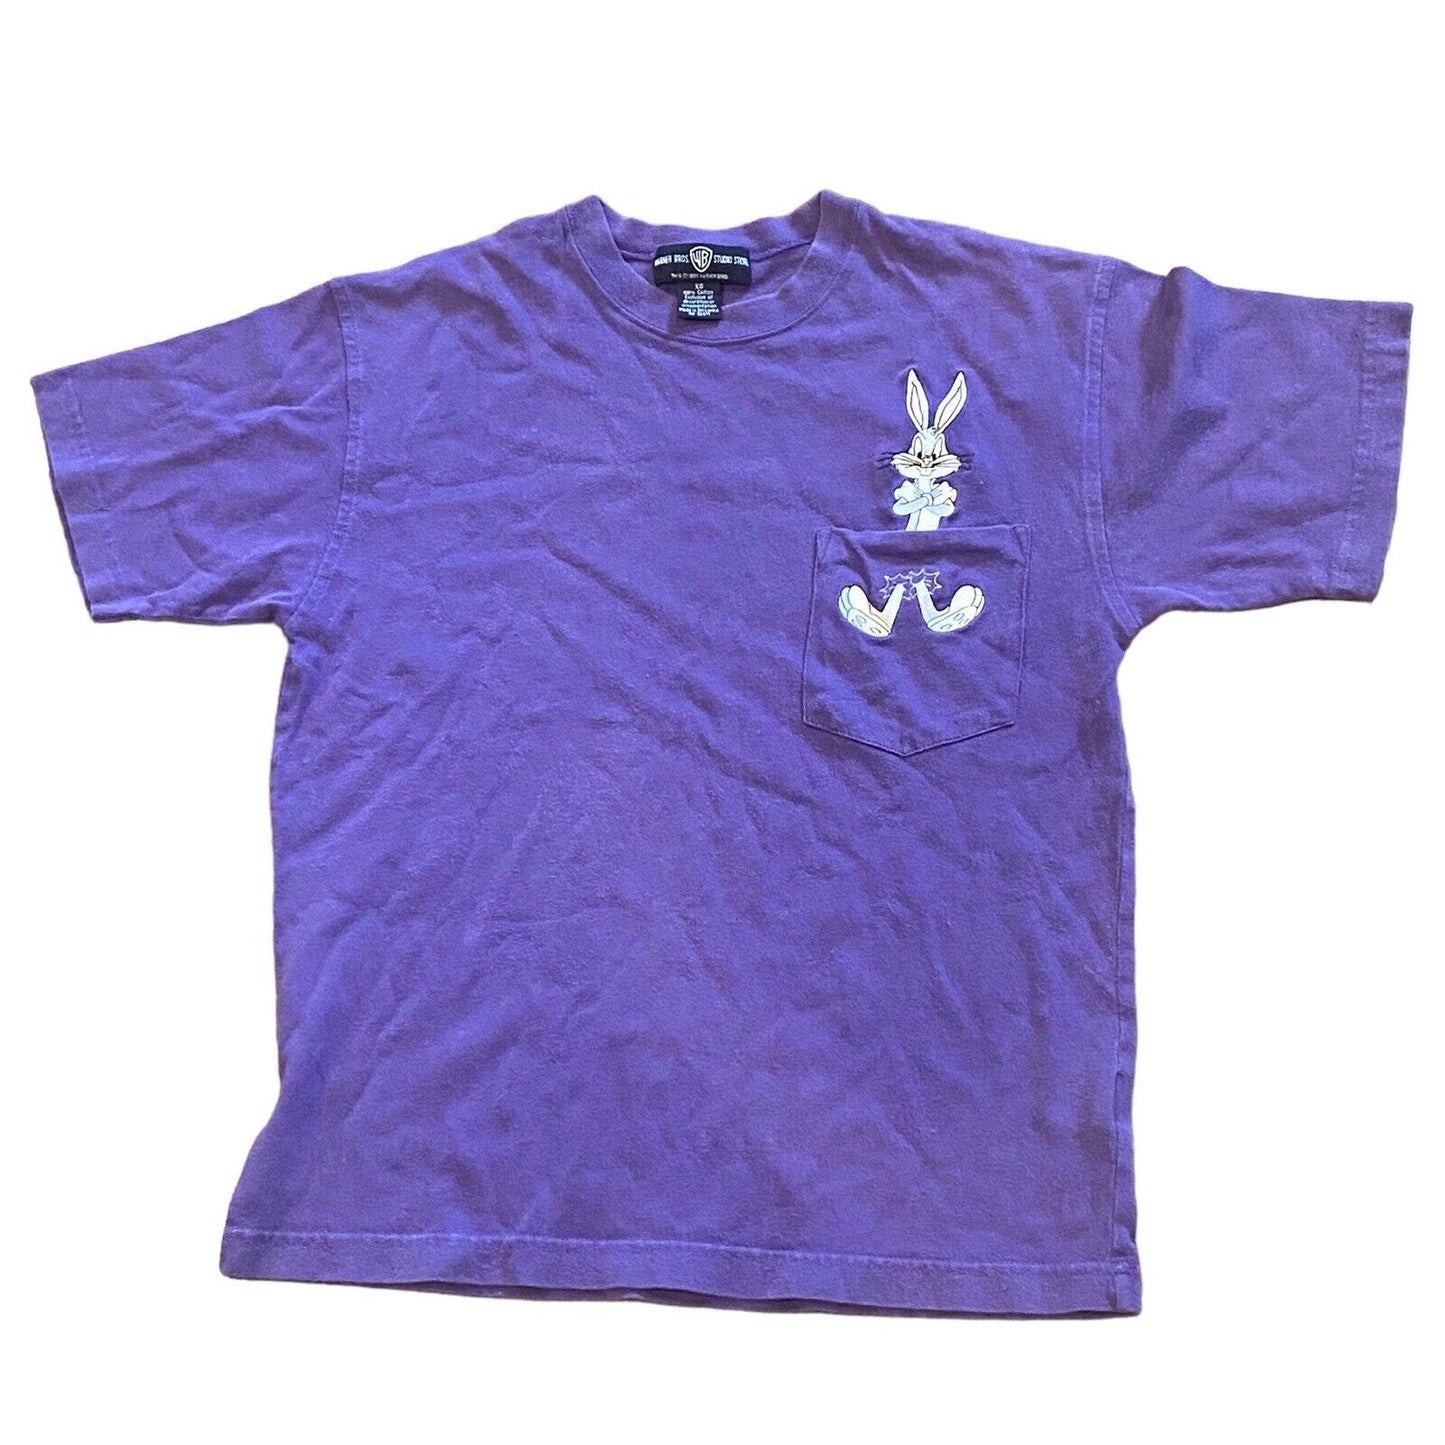 VTG Bugs Bunny Warner Bros Studios Size XS Embroidered Pocket Tee